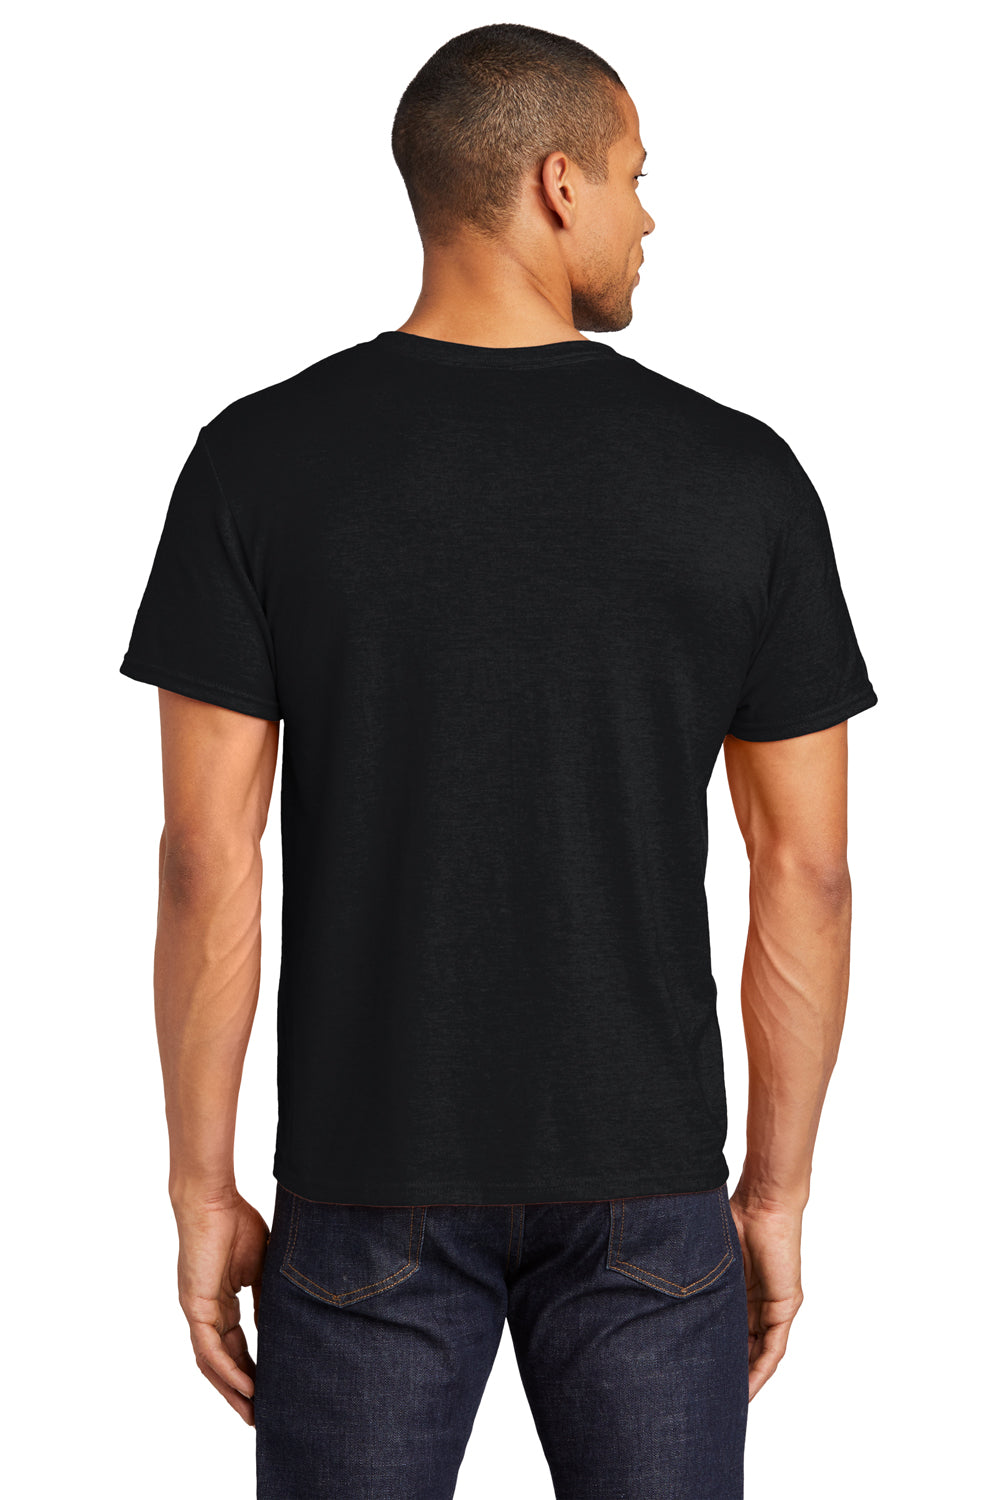 Jerzees 560M Mens Premium Blend Ring Spun Short Sleeve Crewneck T-Shirt Black Ink Back